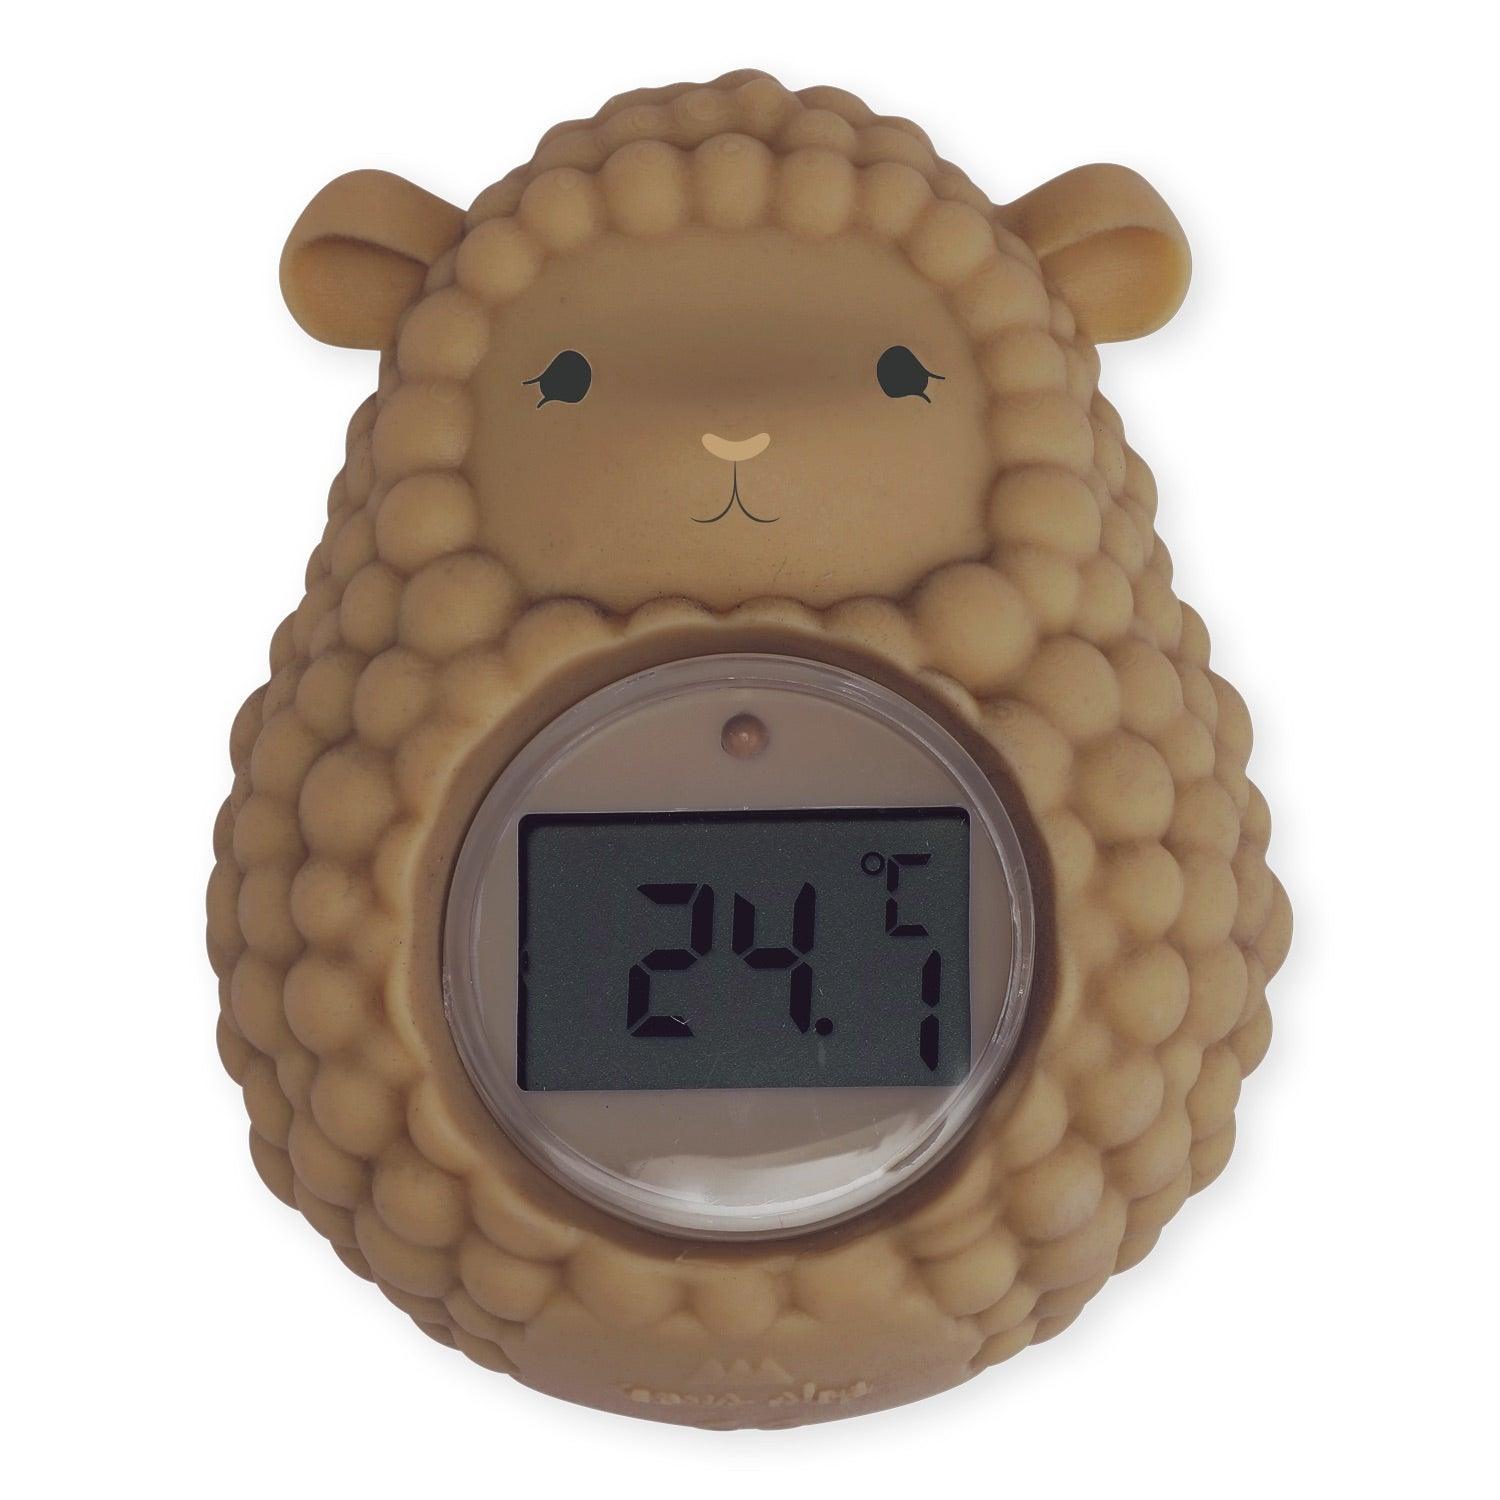 Badethermometer 'Sheep Almond' - AUSSTELLUNGSSTÜCK - The Little One • Family.Concept.Store. 